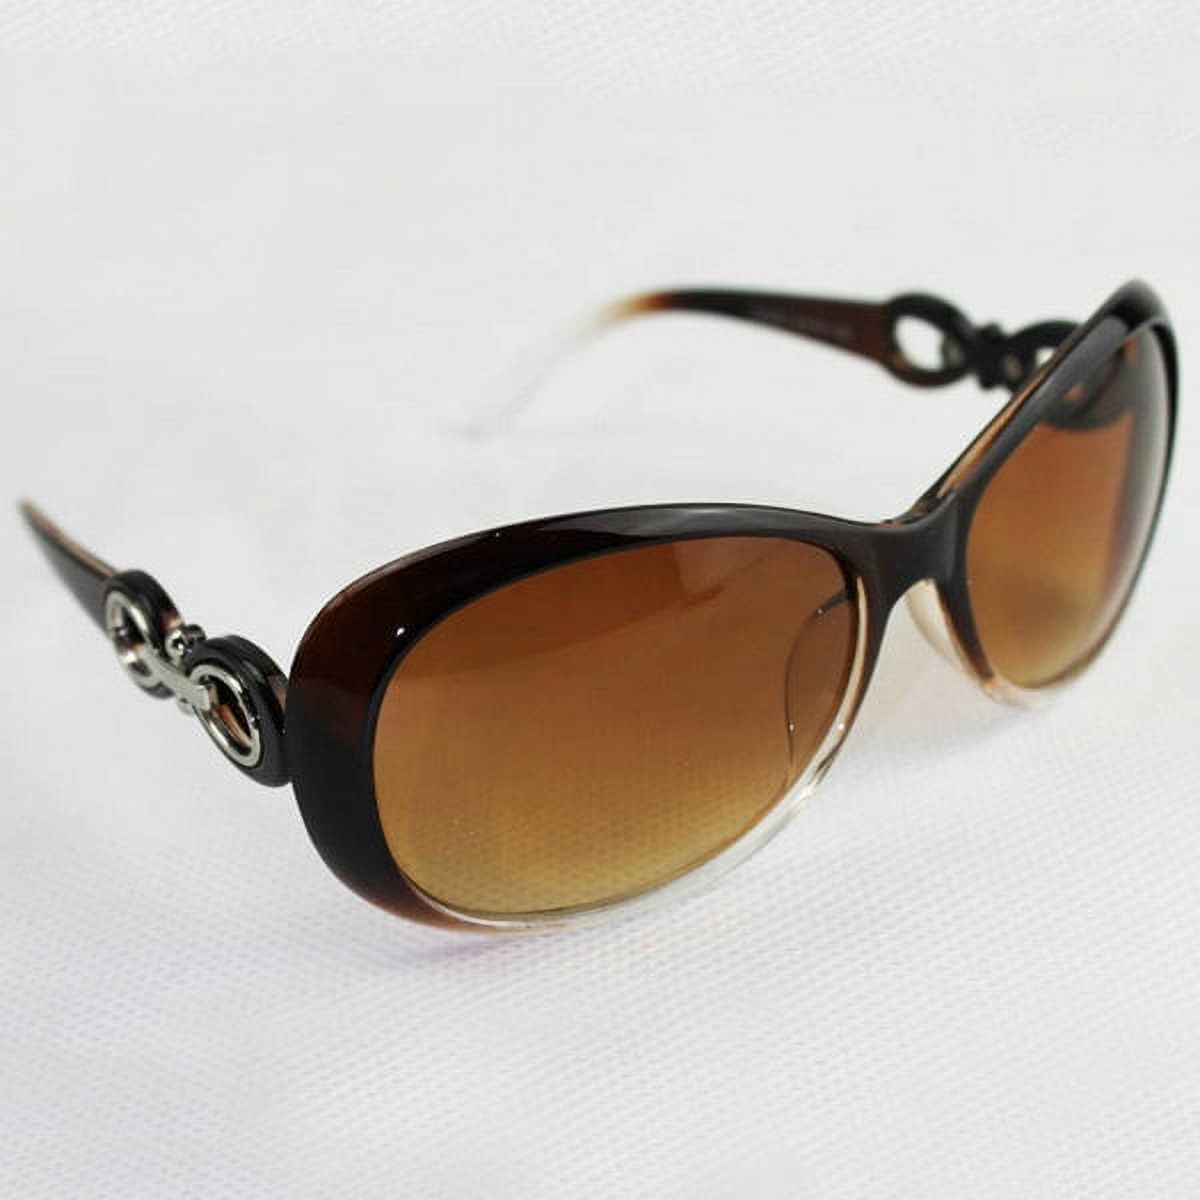 Womens Sunglasses Fashion Sun Glasses UV Protection Sunglasses - image 5 of 5